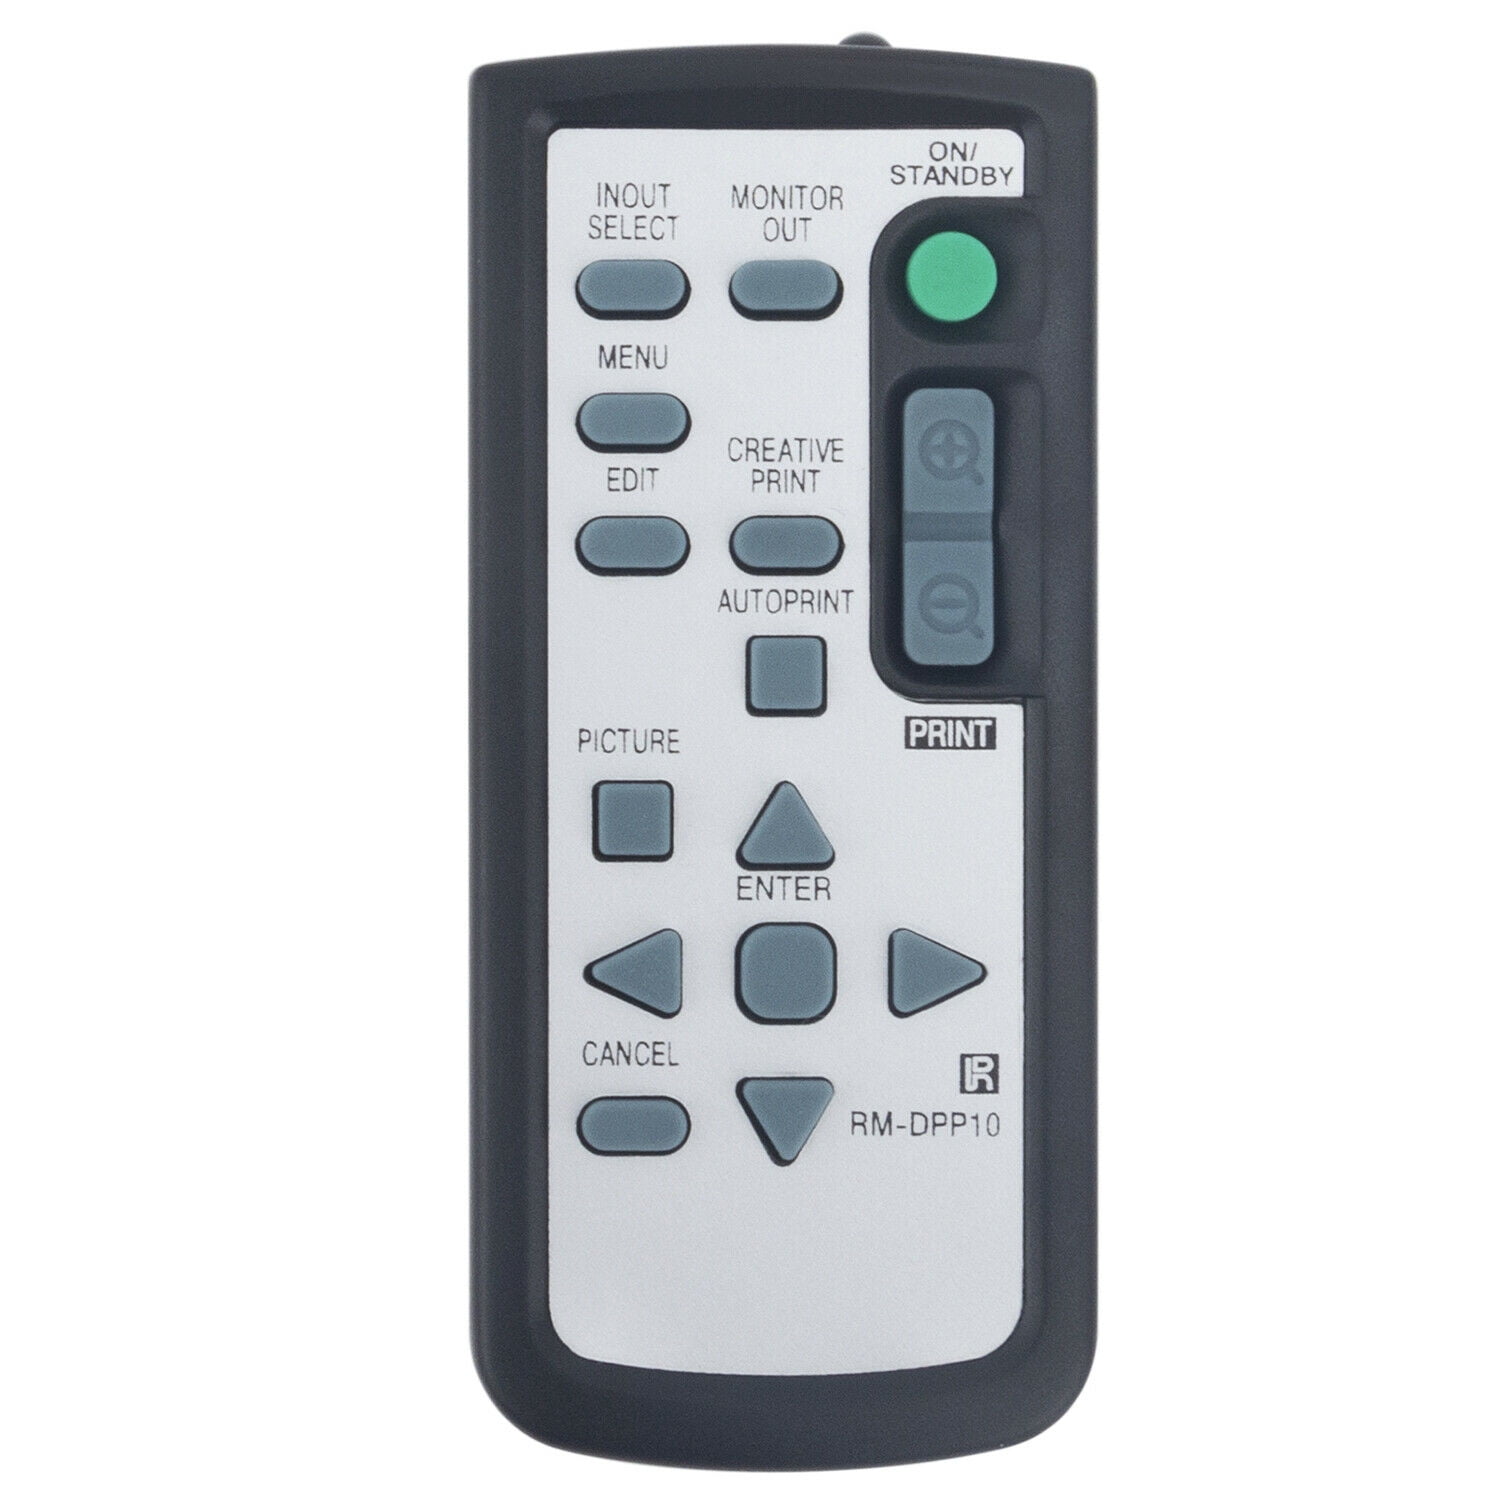 New RM-DPP10 Replaced Remote Control for Sony Digital Printer DPP-FP50 -